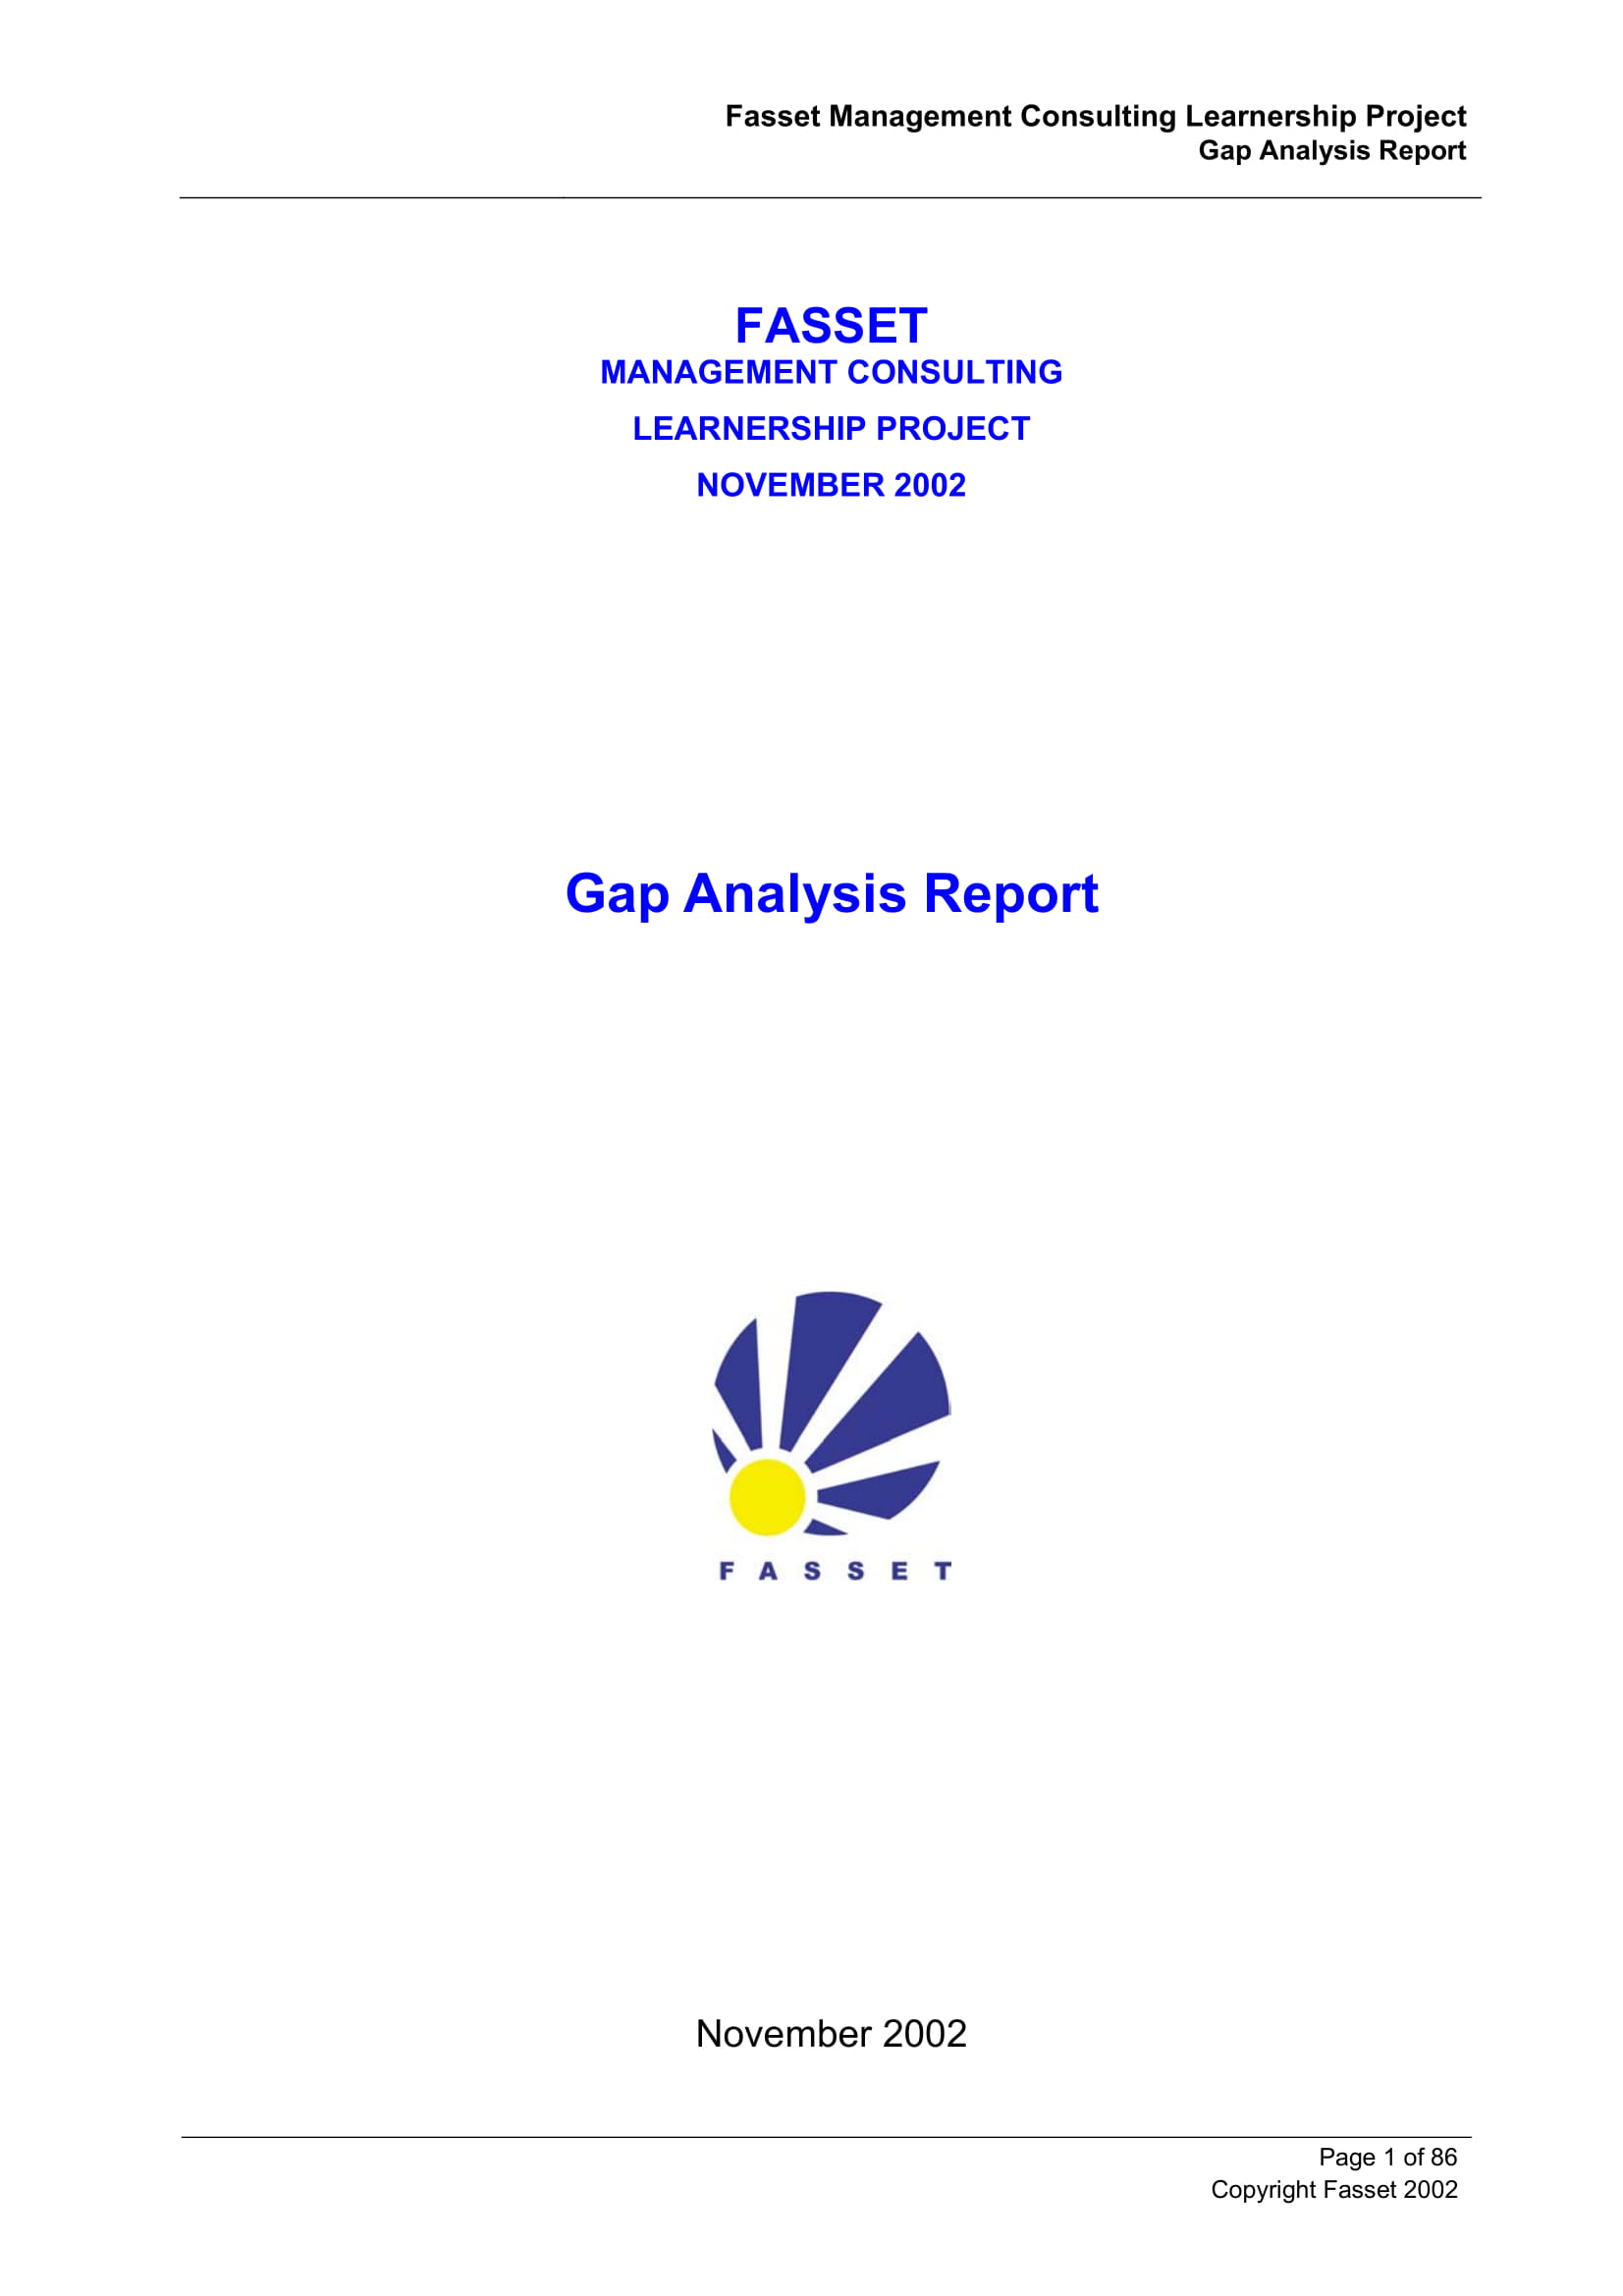 comprehensive gap analysis report example 01